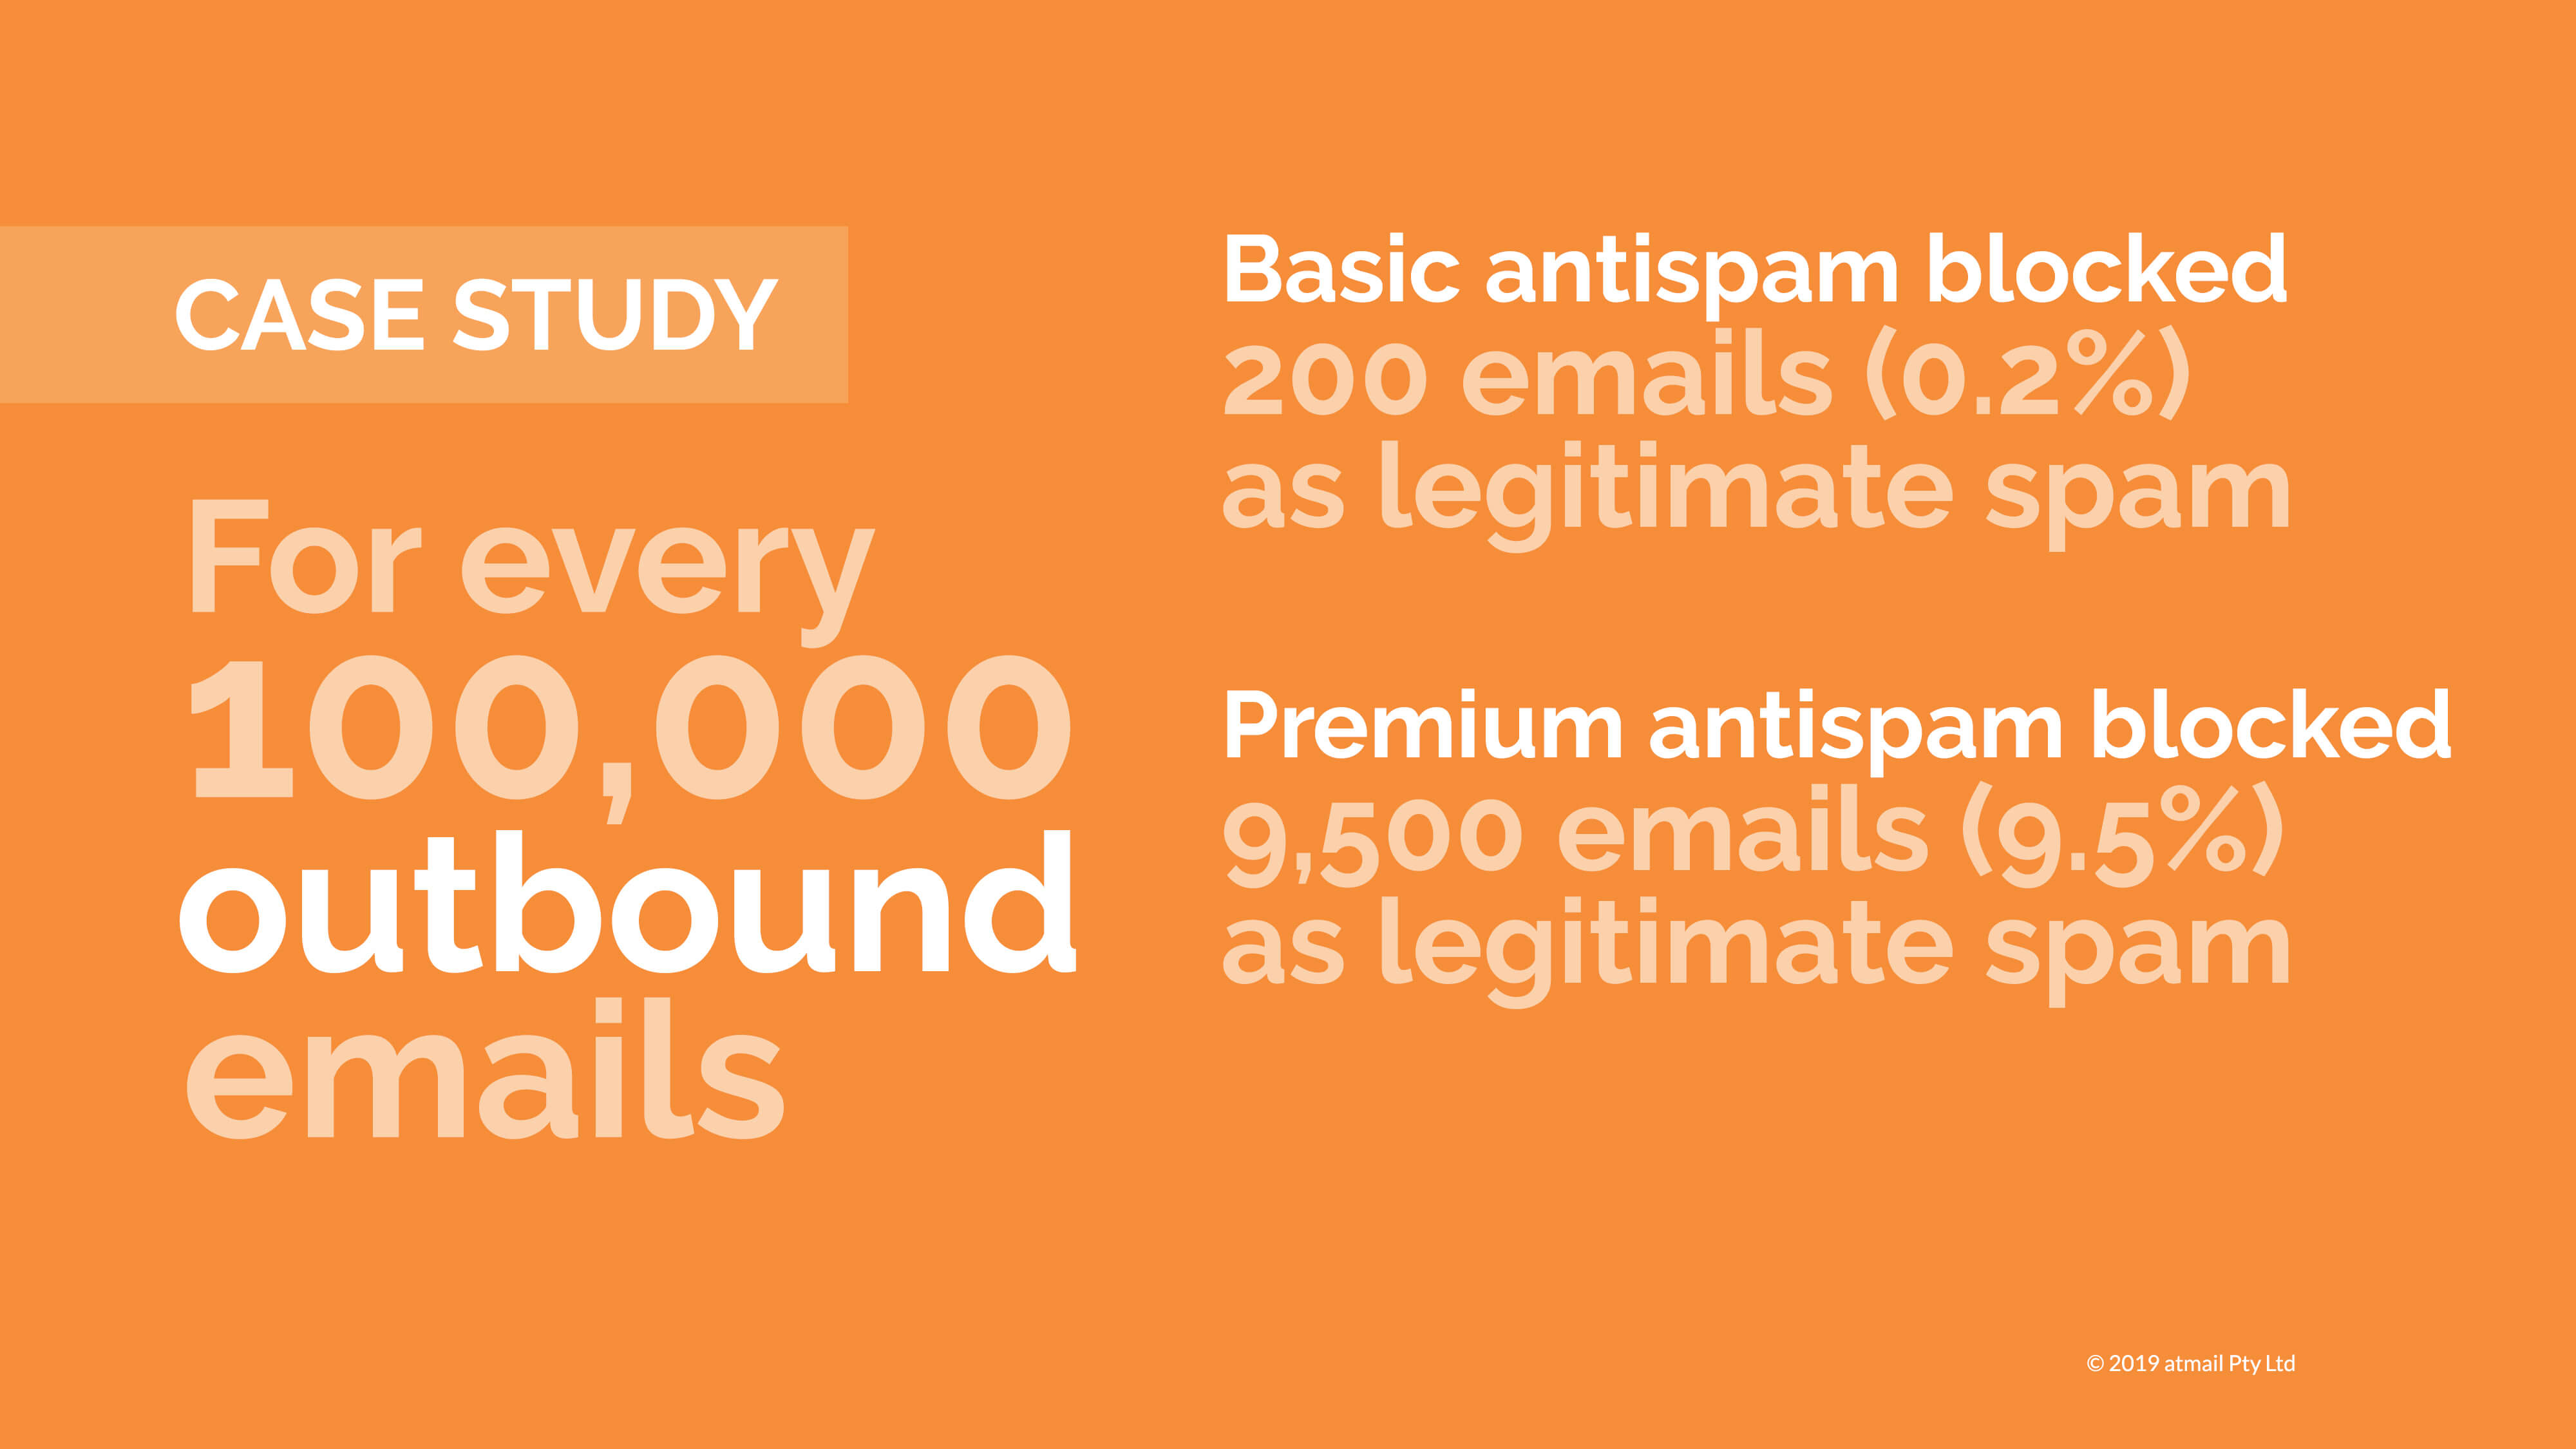 atmail premium antispam - outbound - case study statistic